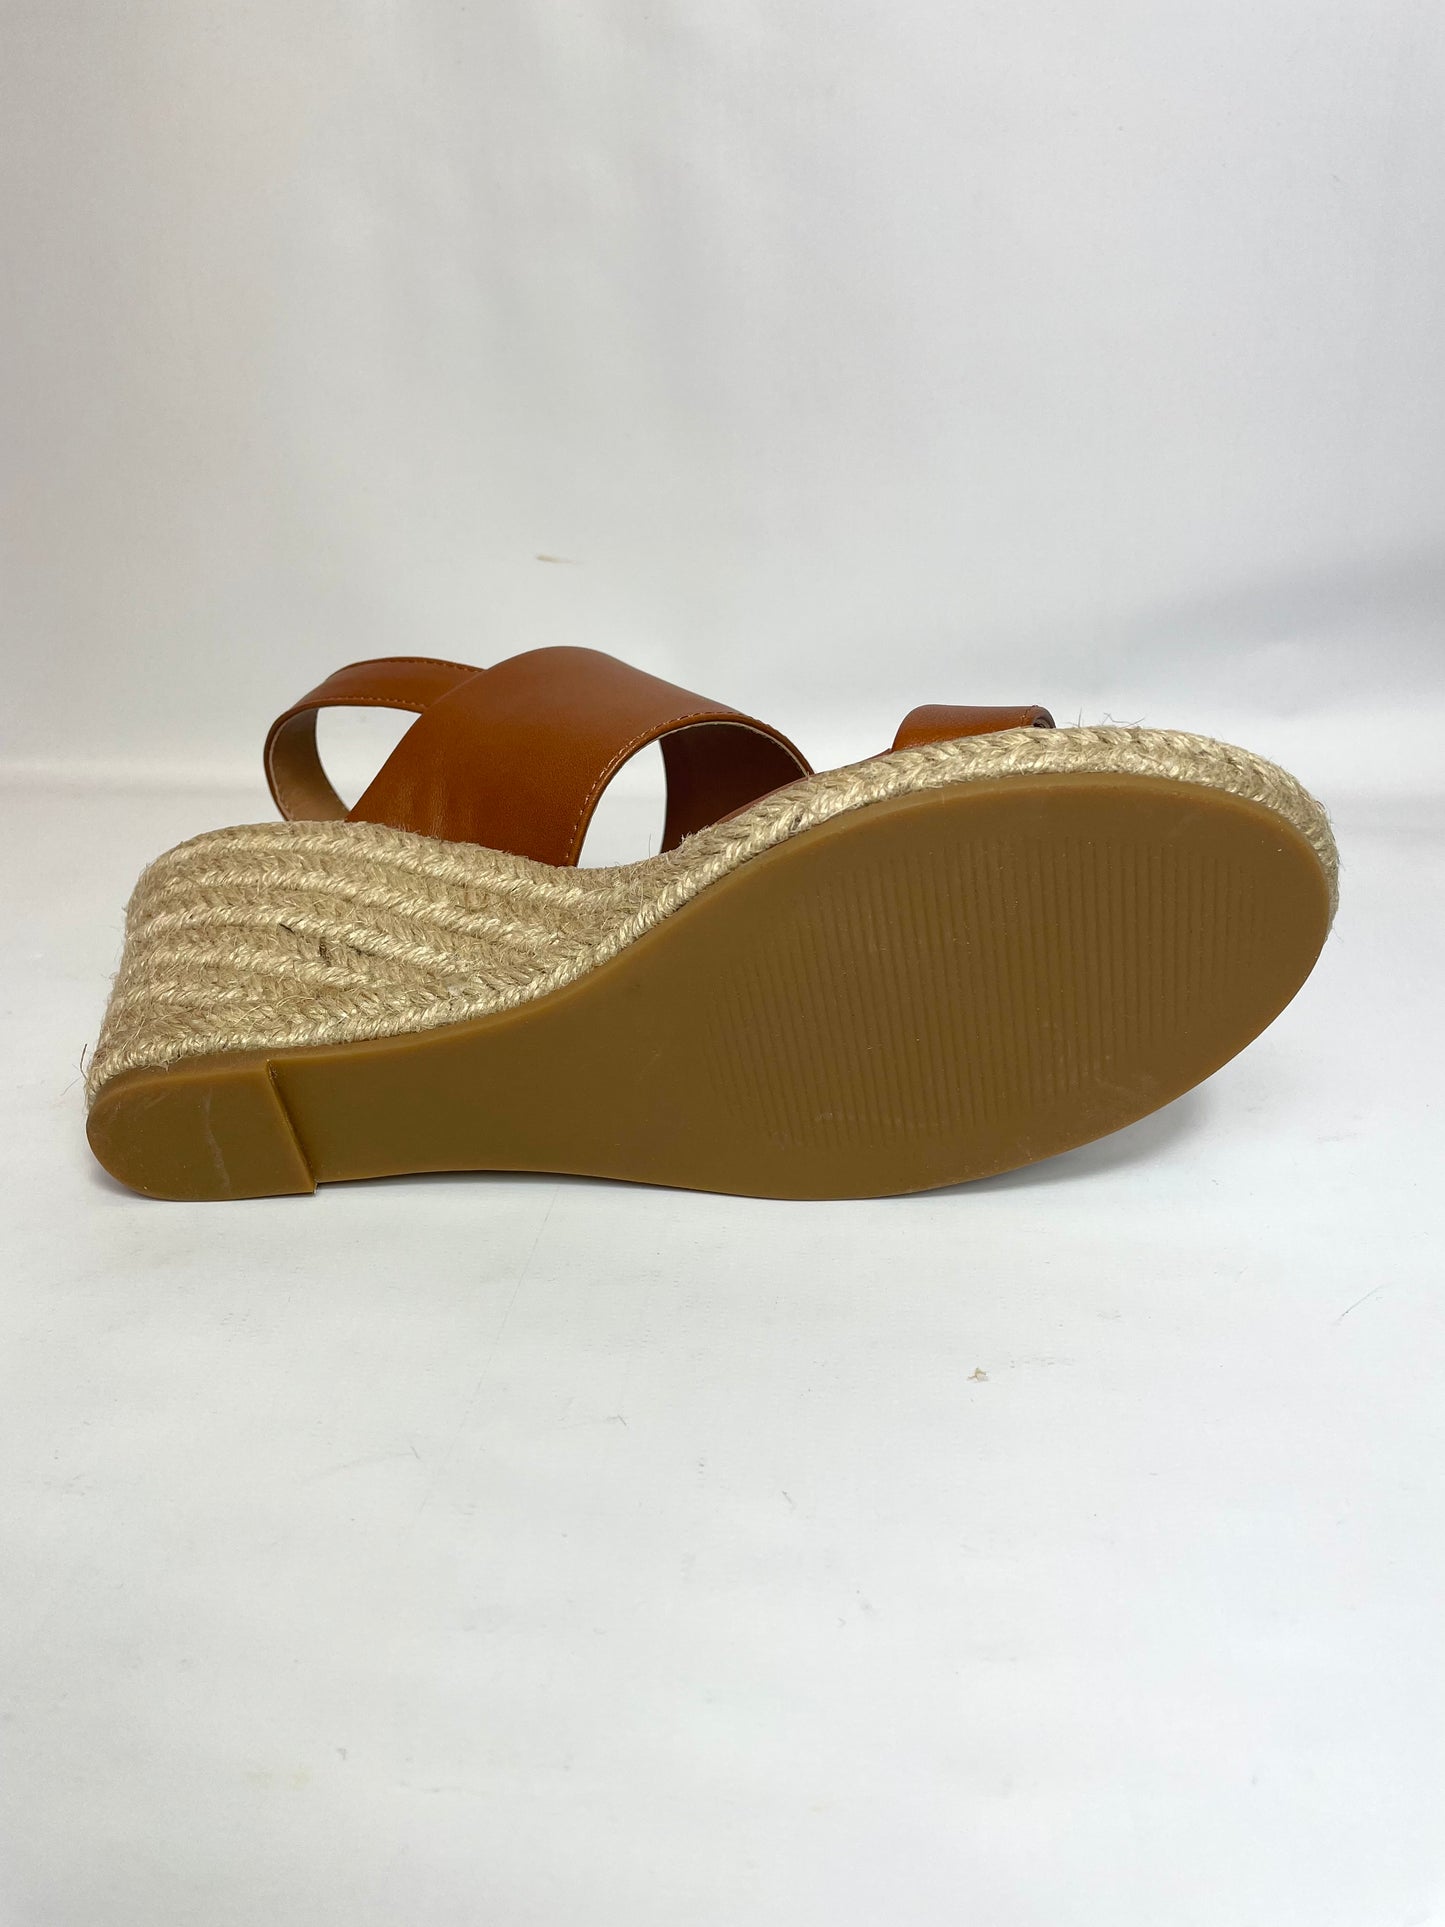 Women’s Handmade Espadrilles Sandals Ankle Strap Buckle Wedge Sandal in Brown UK 3 / EU 36